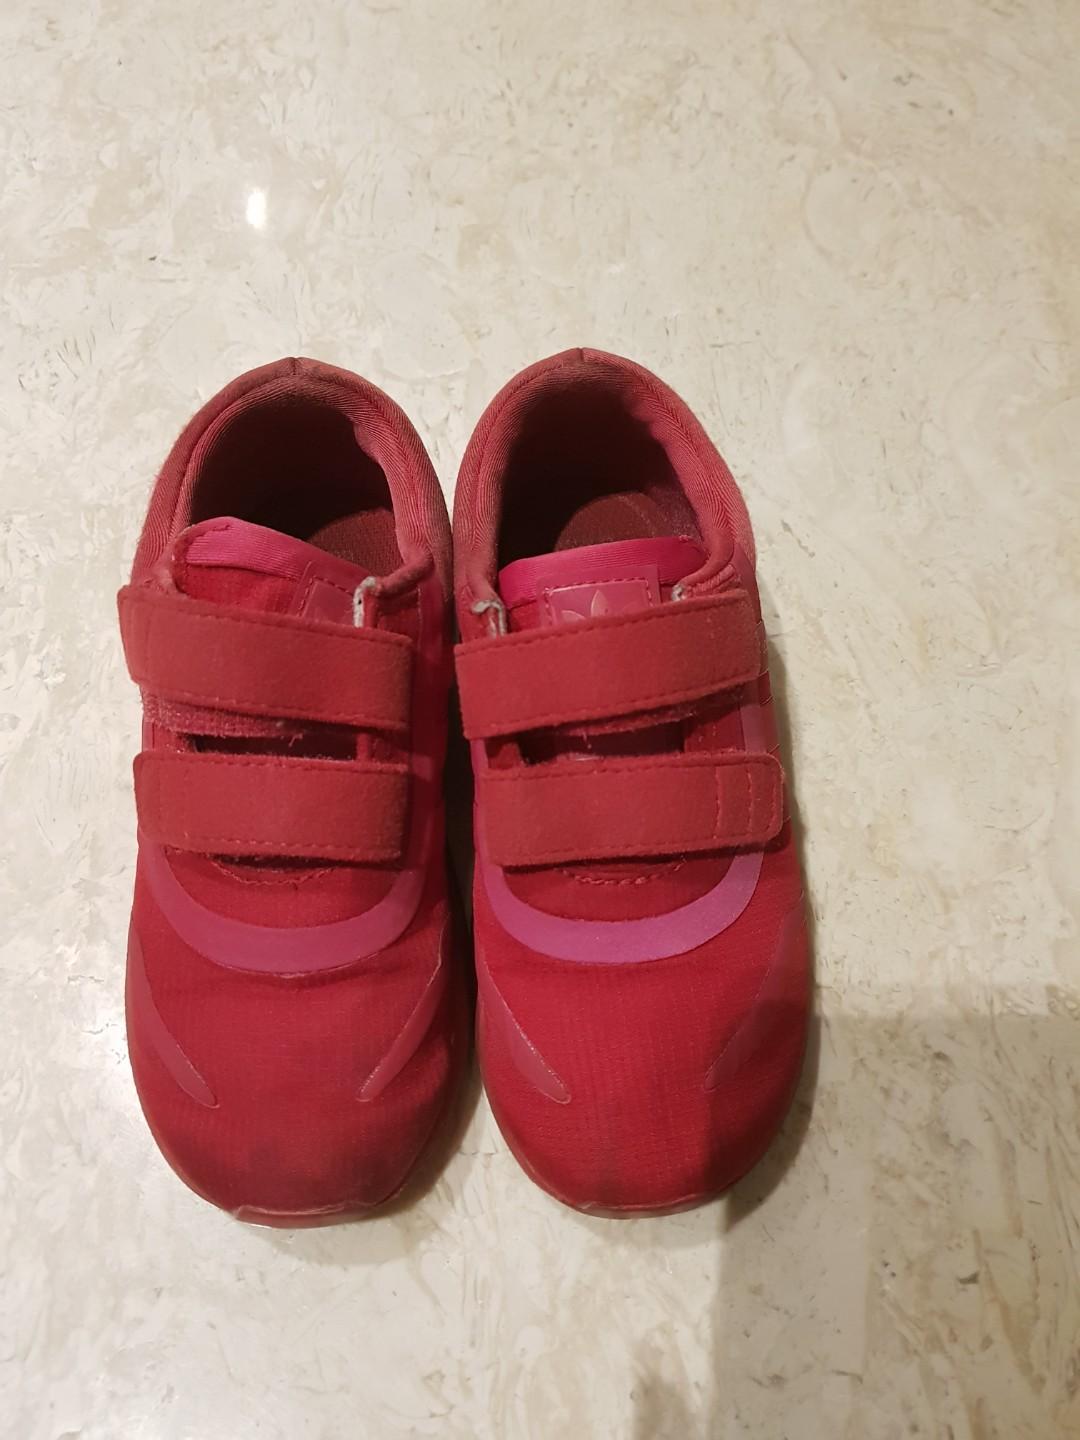 adidas kids shoes